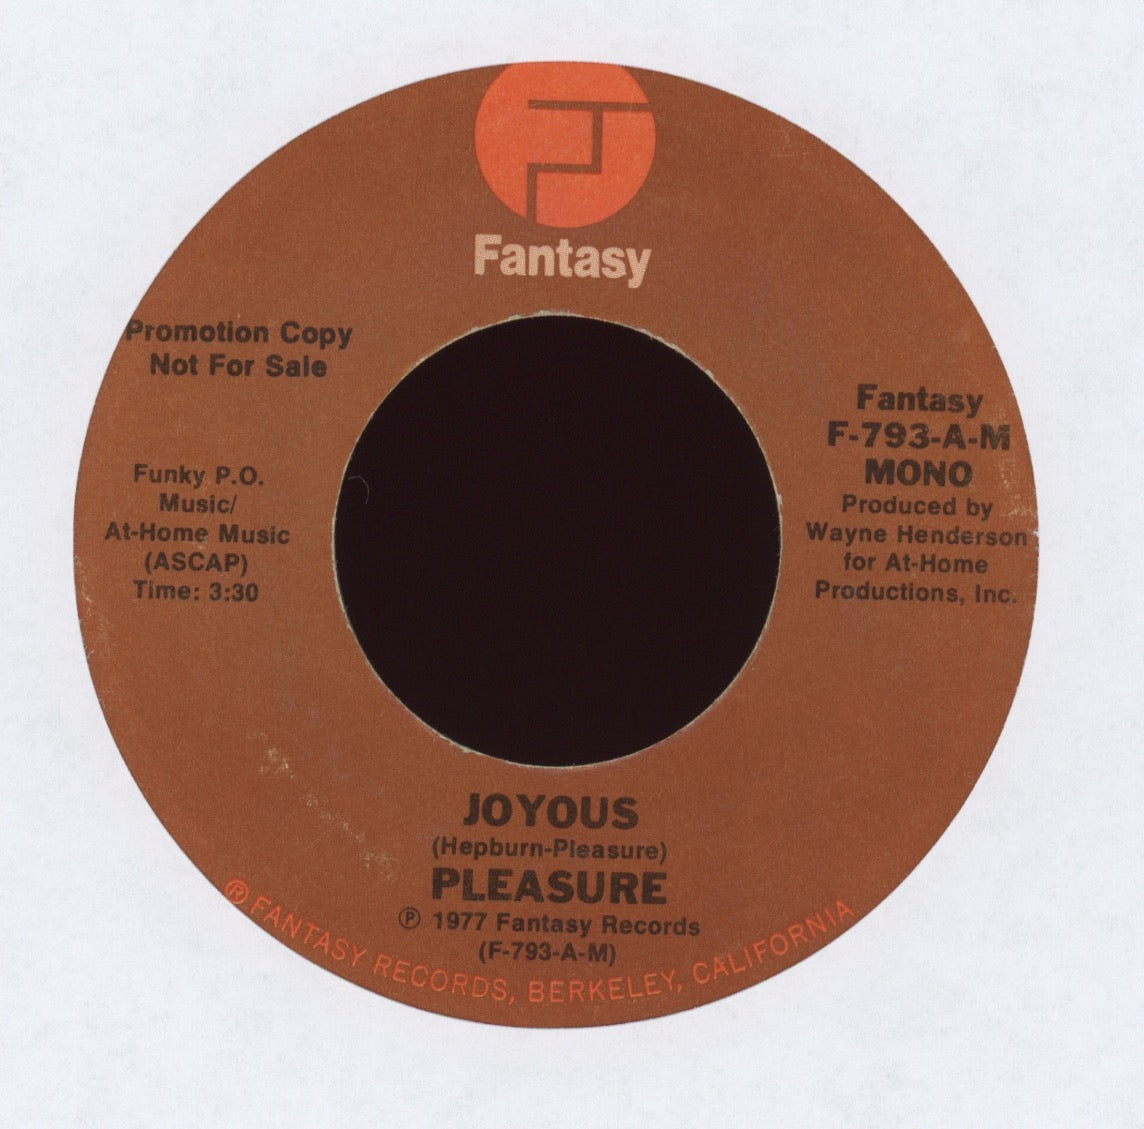 Pleasure - Joyous on Fantasy Promo Funk 45